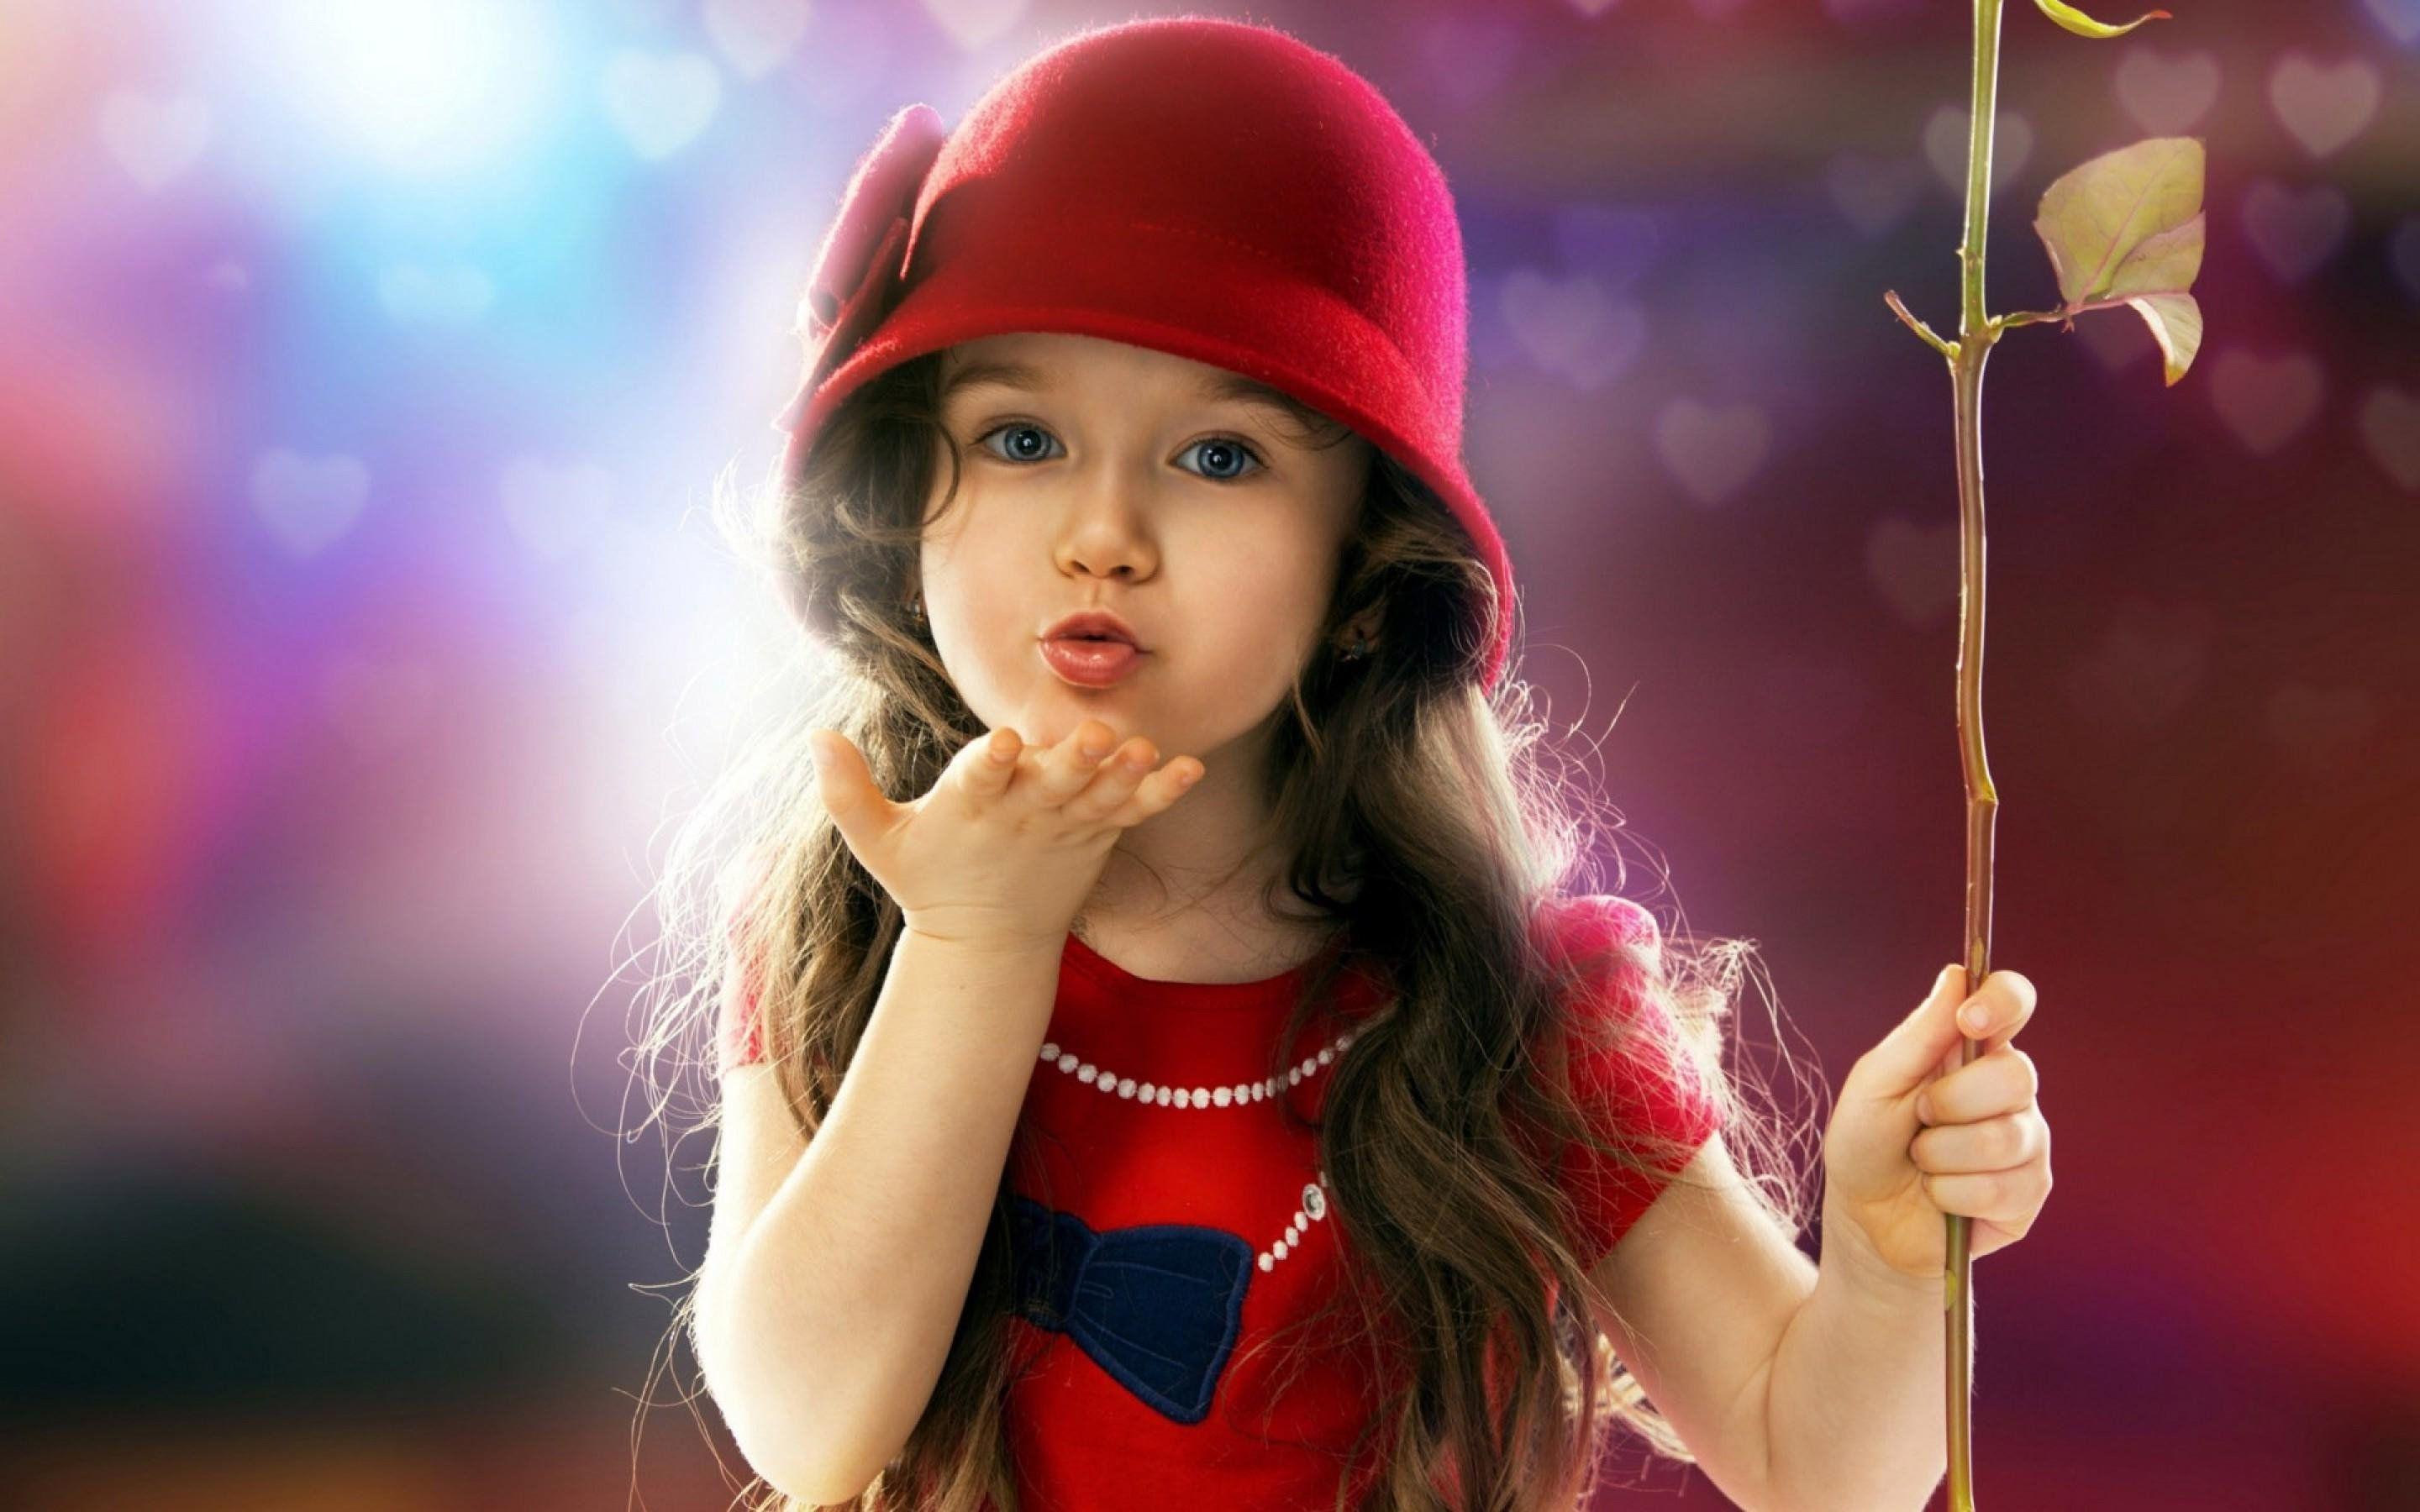 Little Girl Blowing a Kiss, HD Cute, 4k Wallpaper, Image